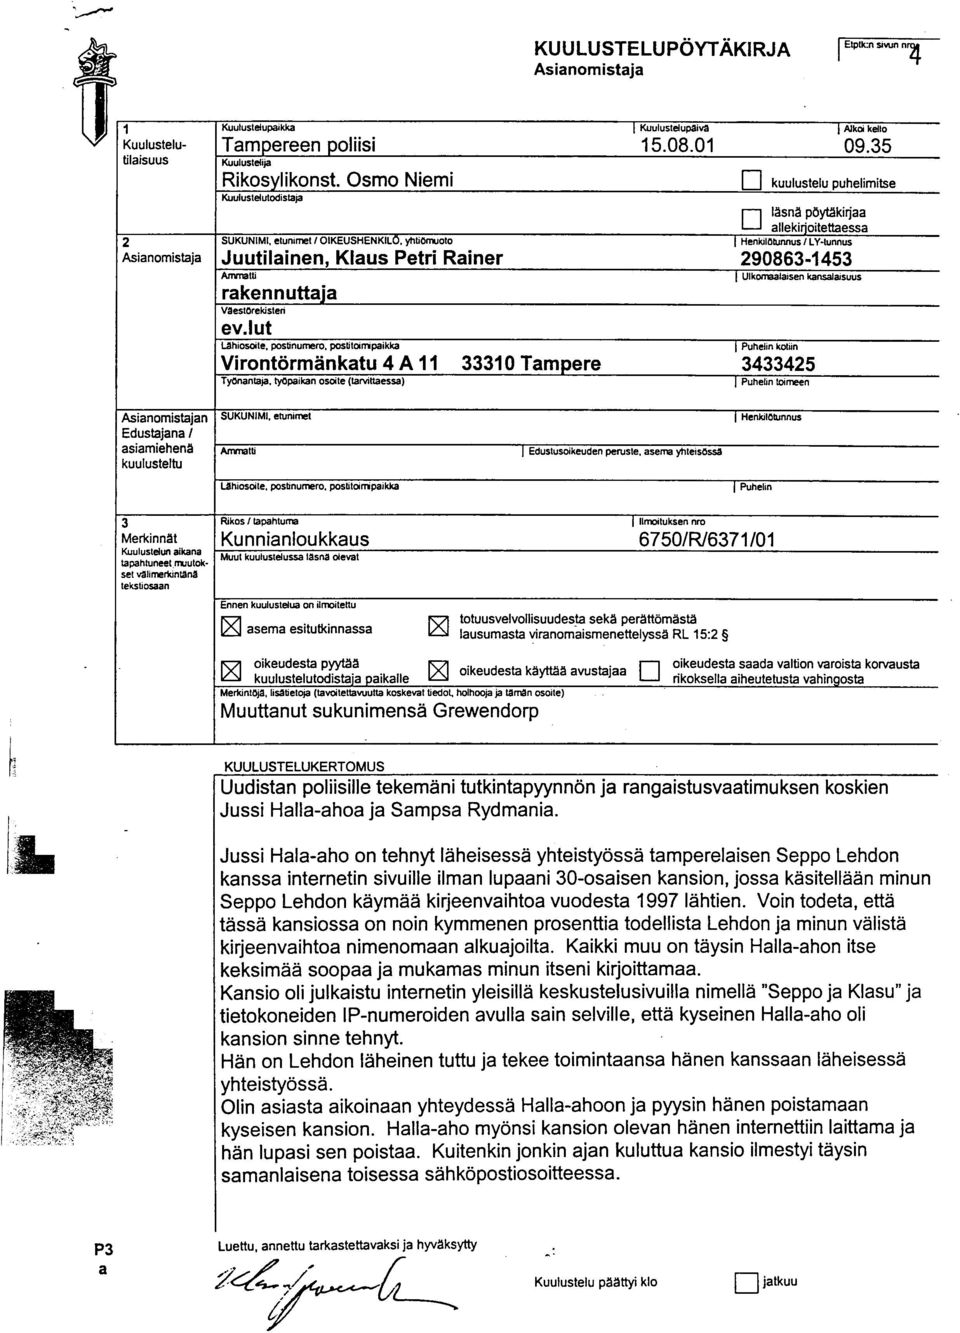 290863-1453 Anvnatti Ulk=alaisen kansalaisuus rakennutta"a V3estOrekisteri ev.